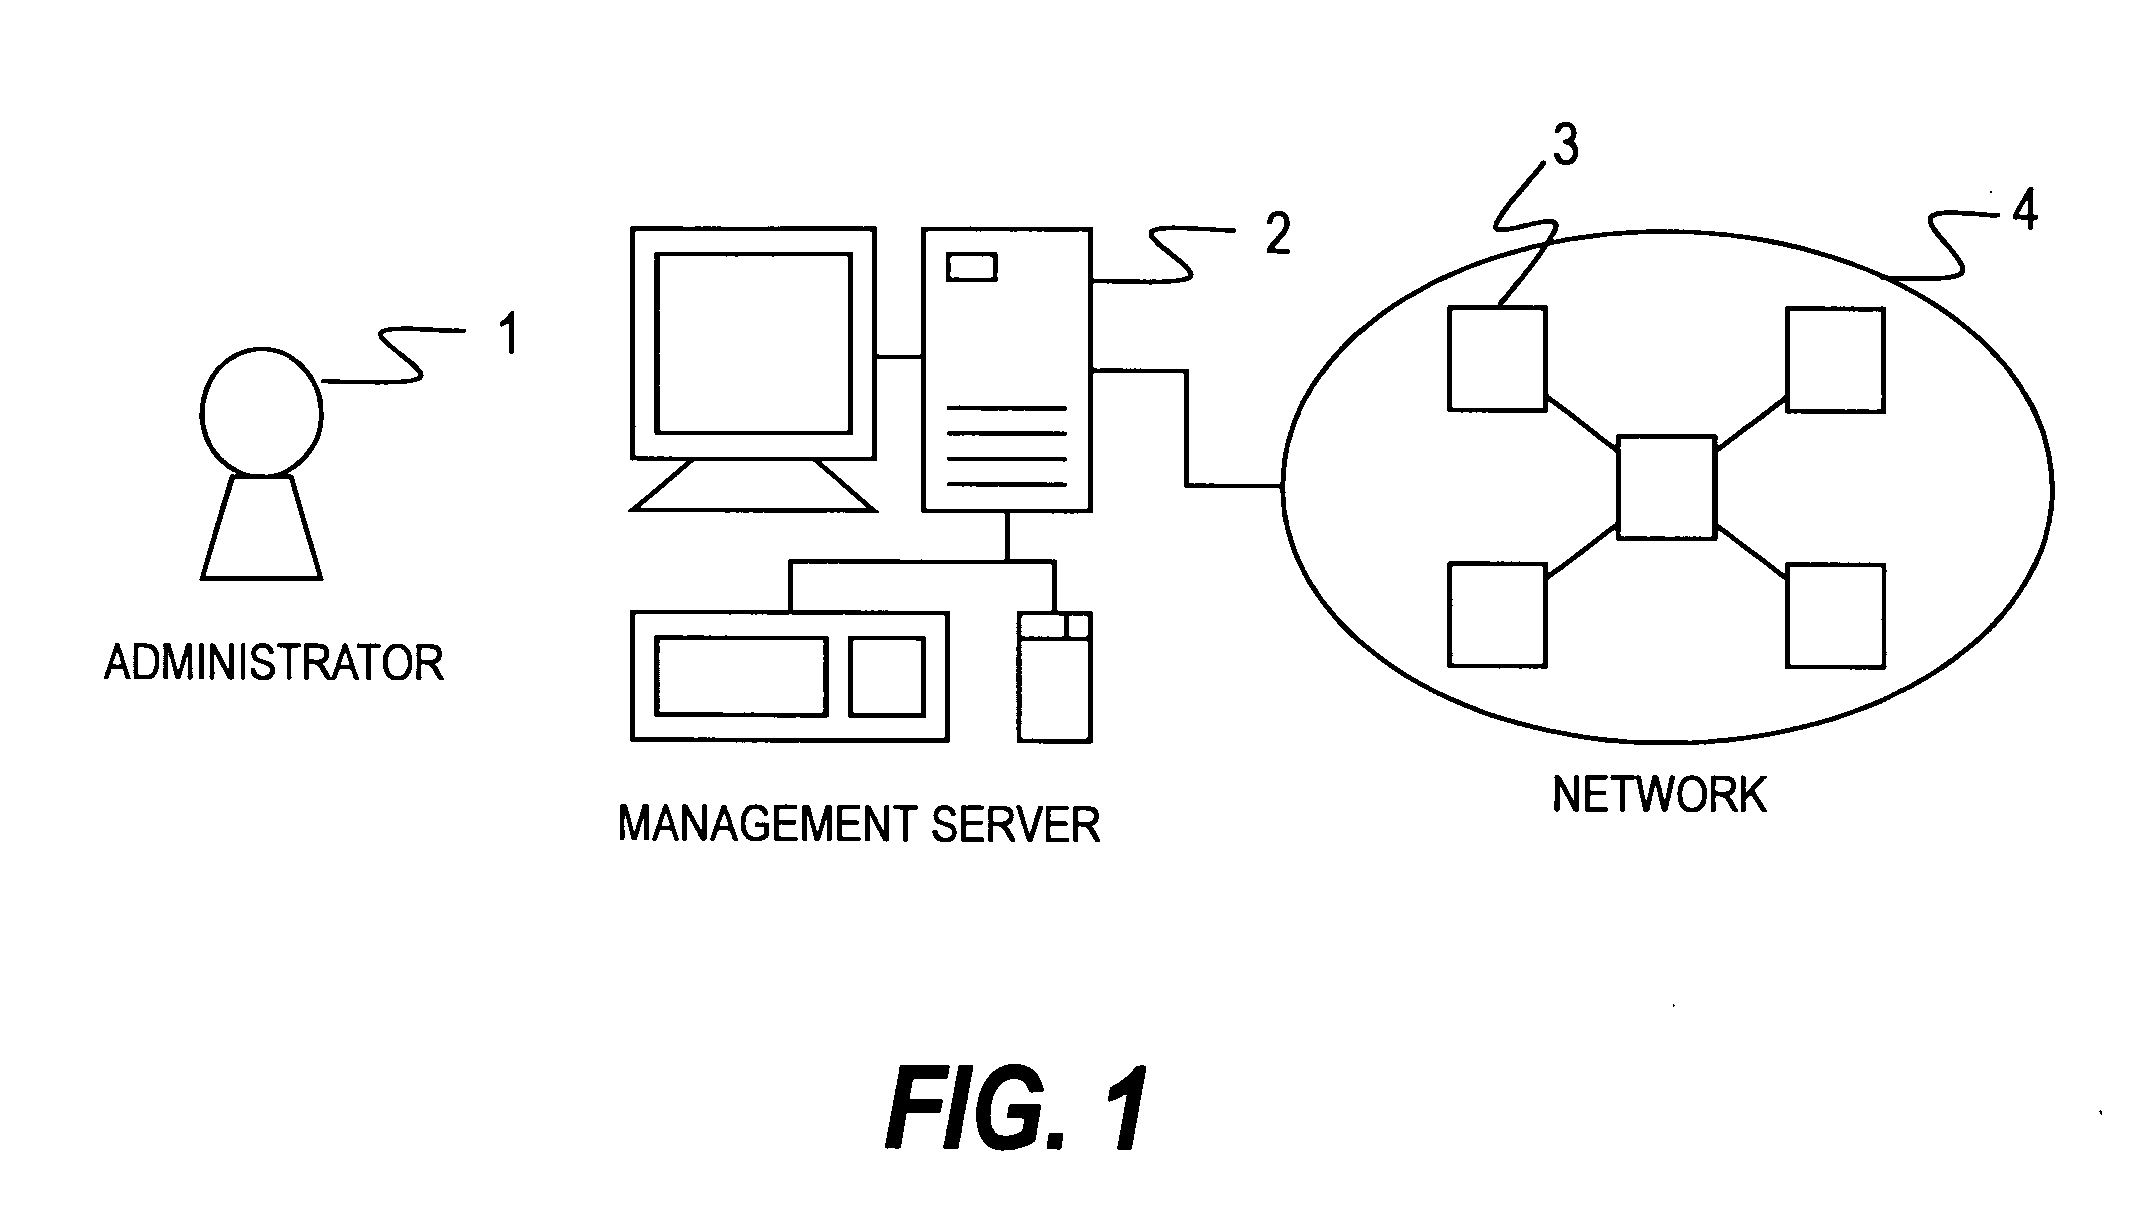 Management computer for setting configuration information of node